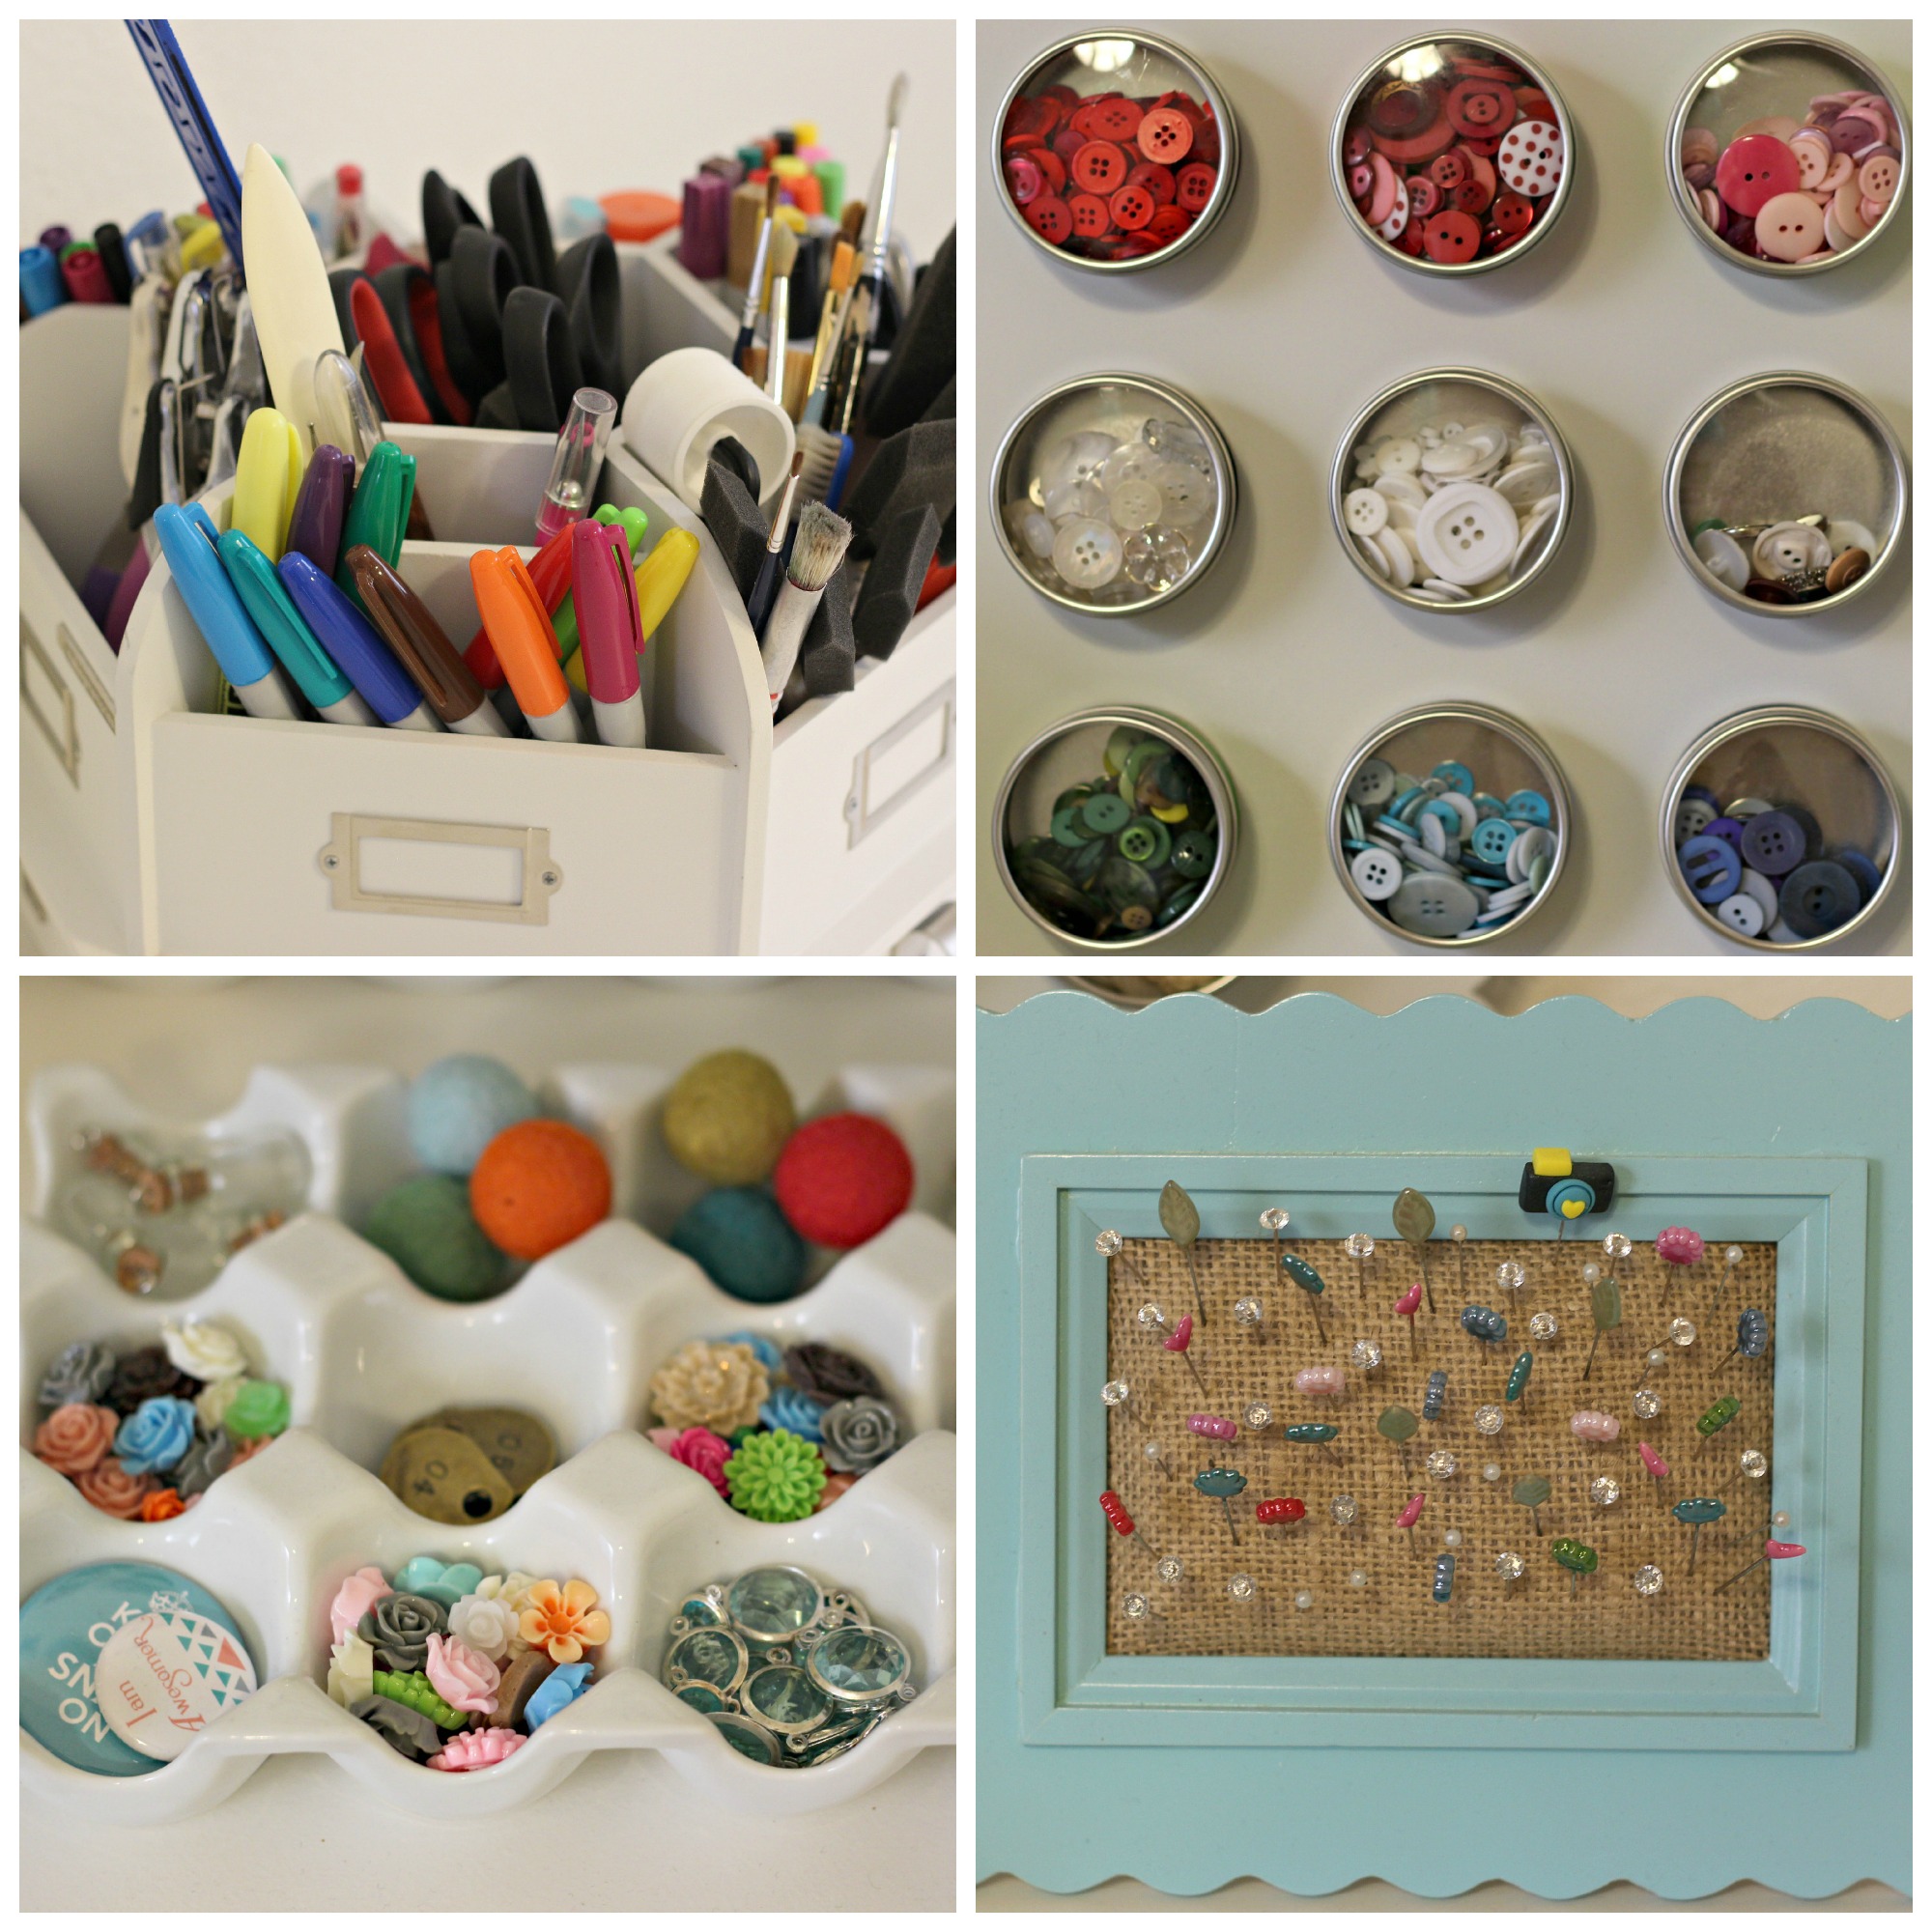 https://organizeyourstuffnow.com/wordpress/wp-content/uploads/2014/01/craft-supplies-small-items.jpg